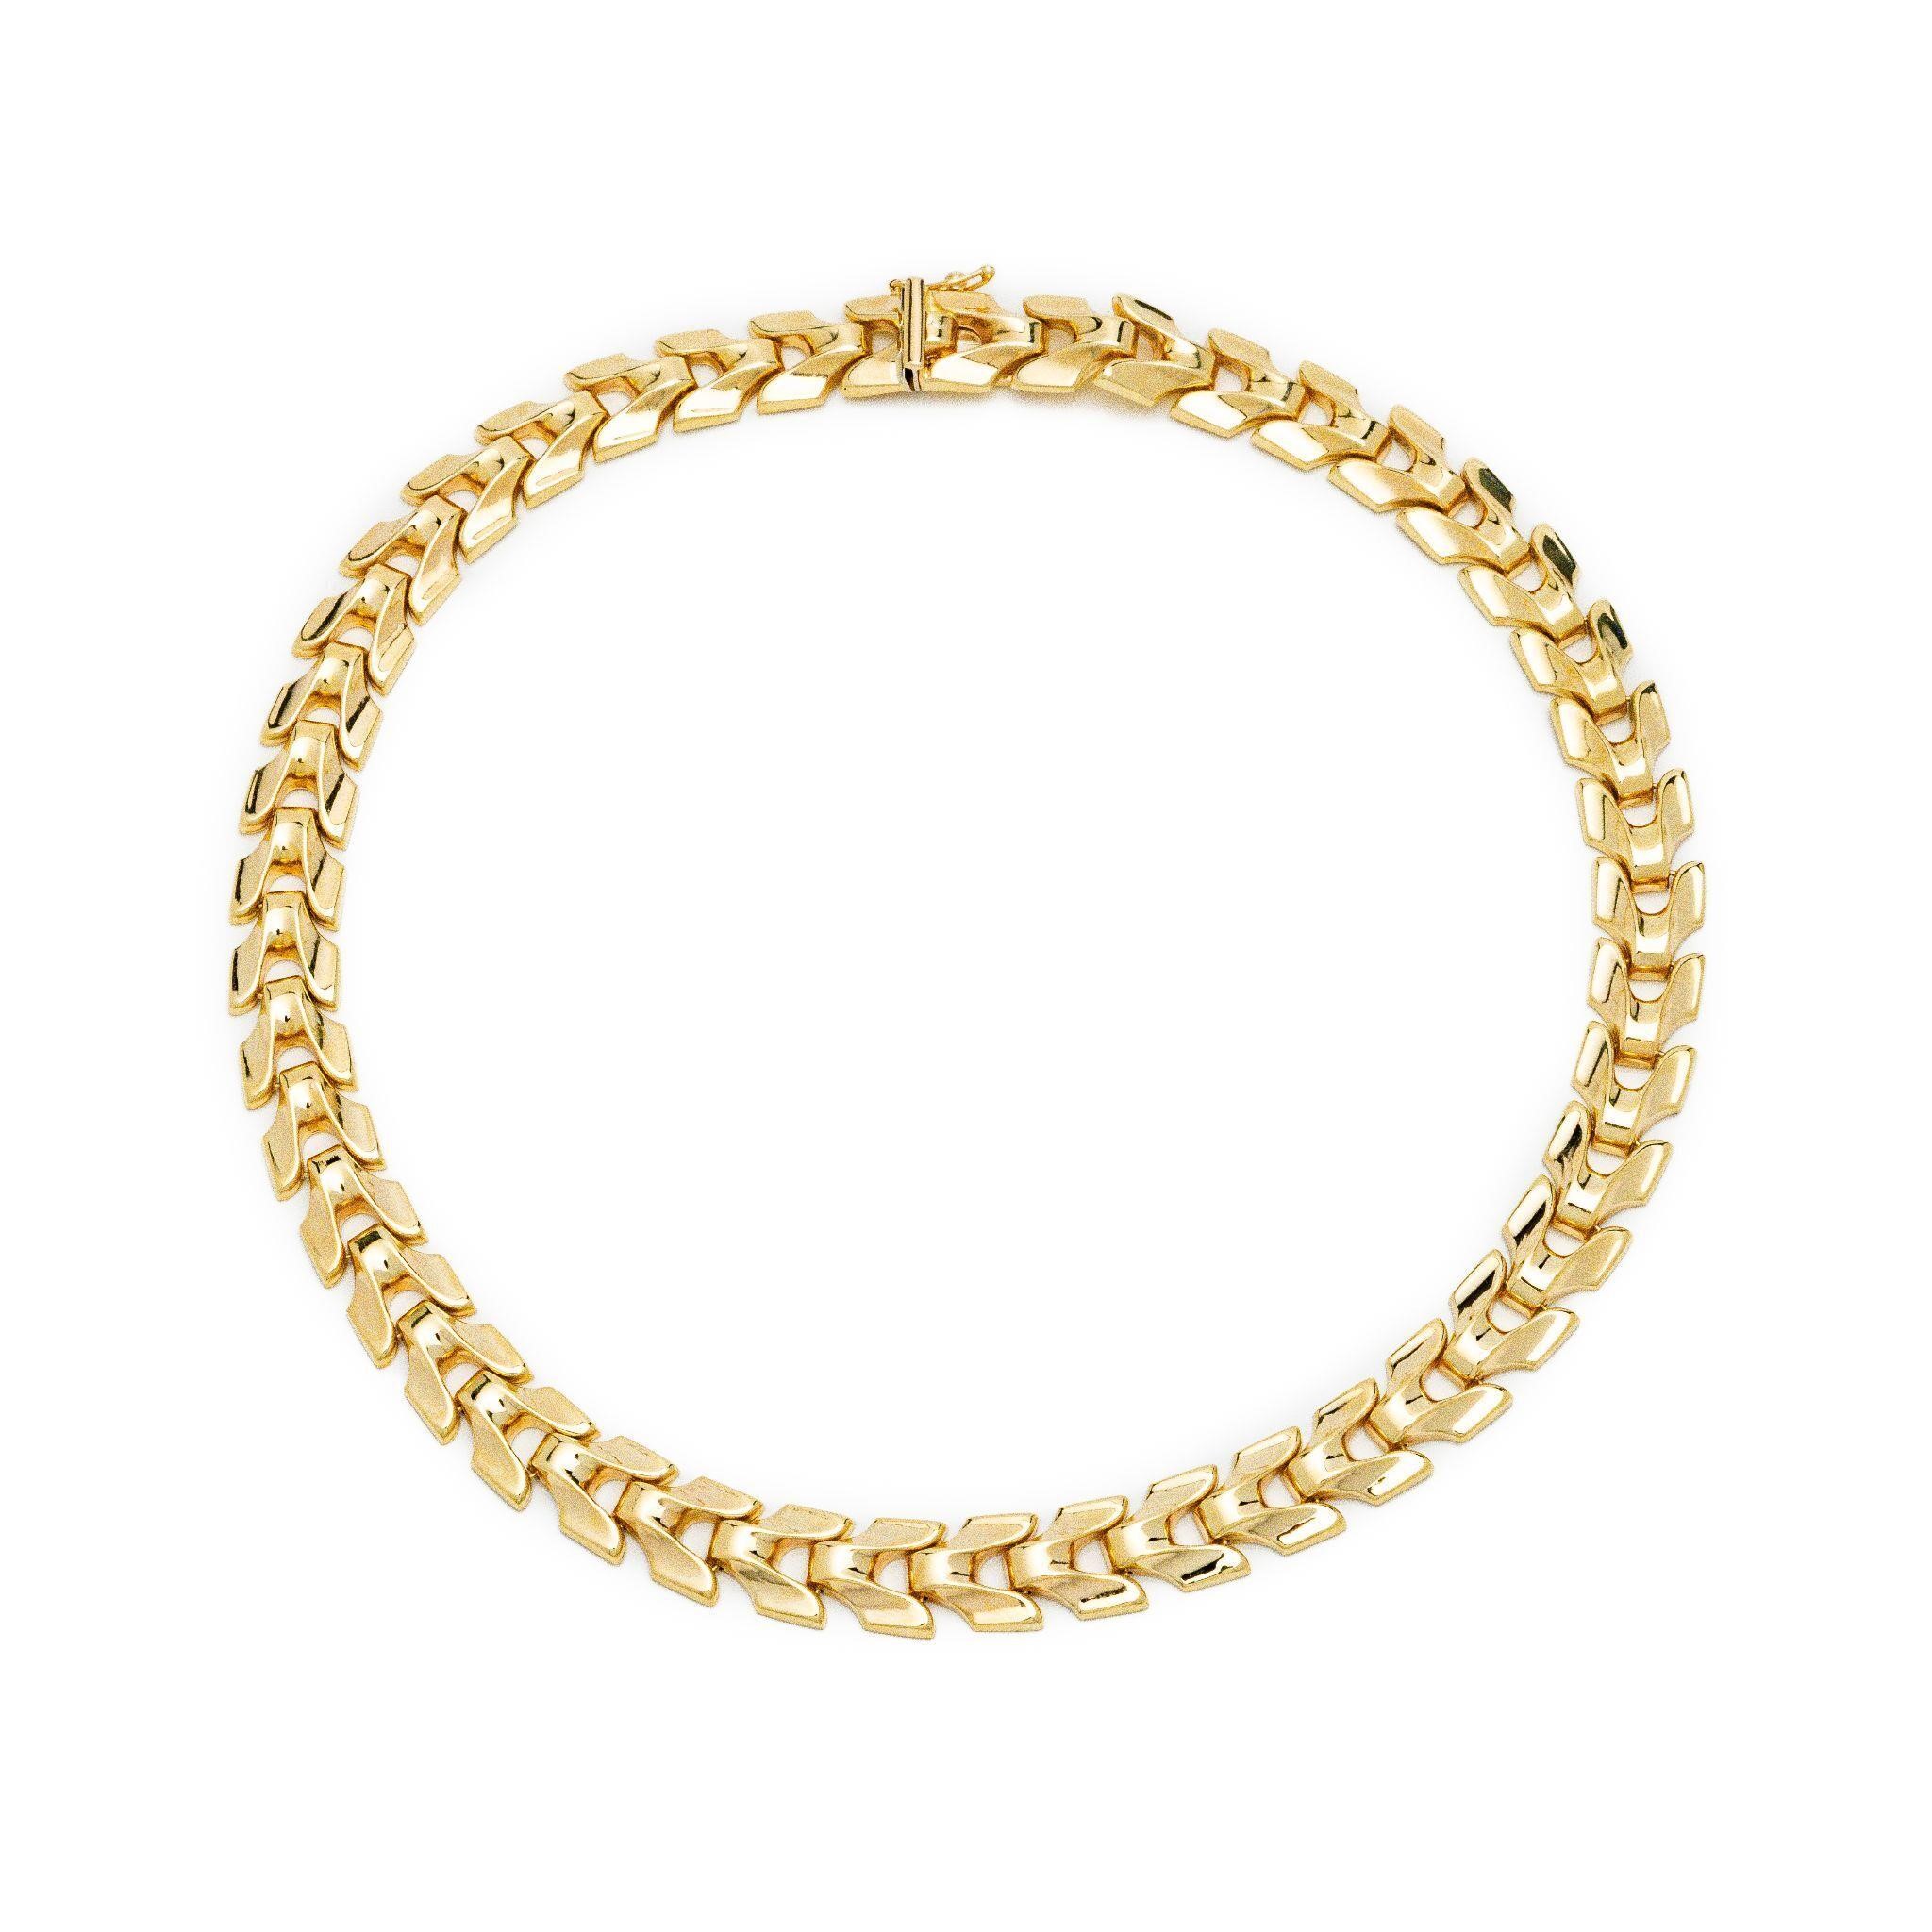 Aurafin 14kt Gold 16 Inch Choker Chain Necklace